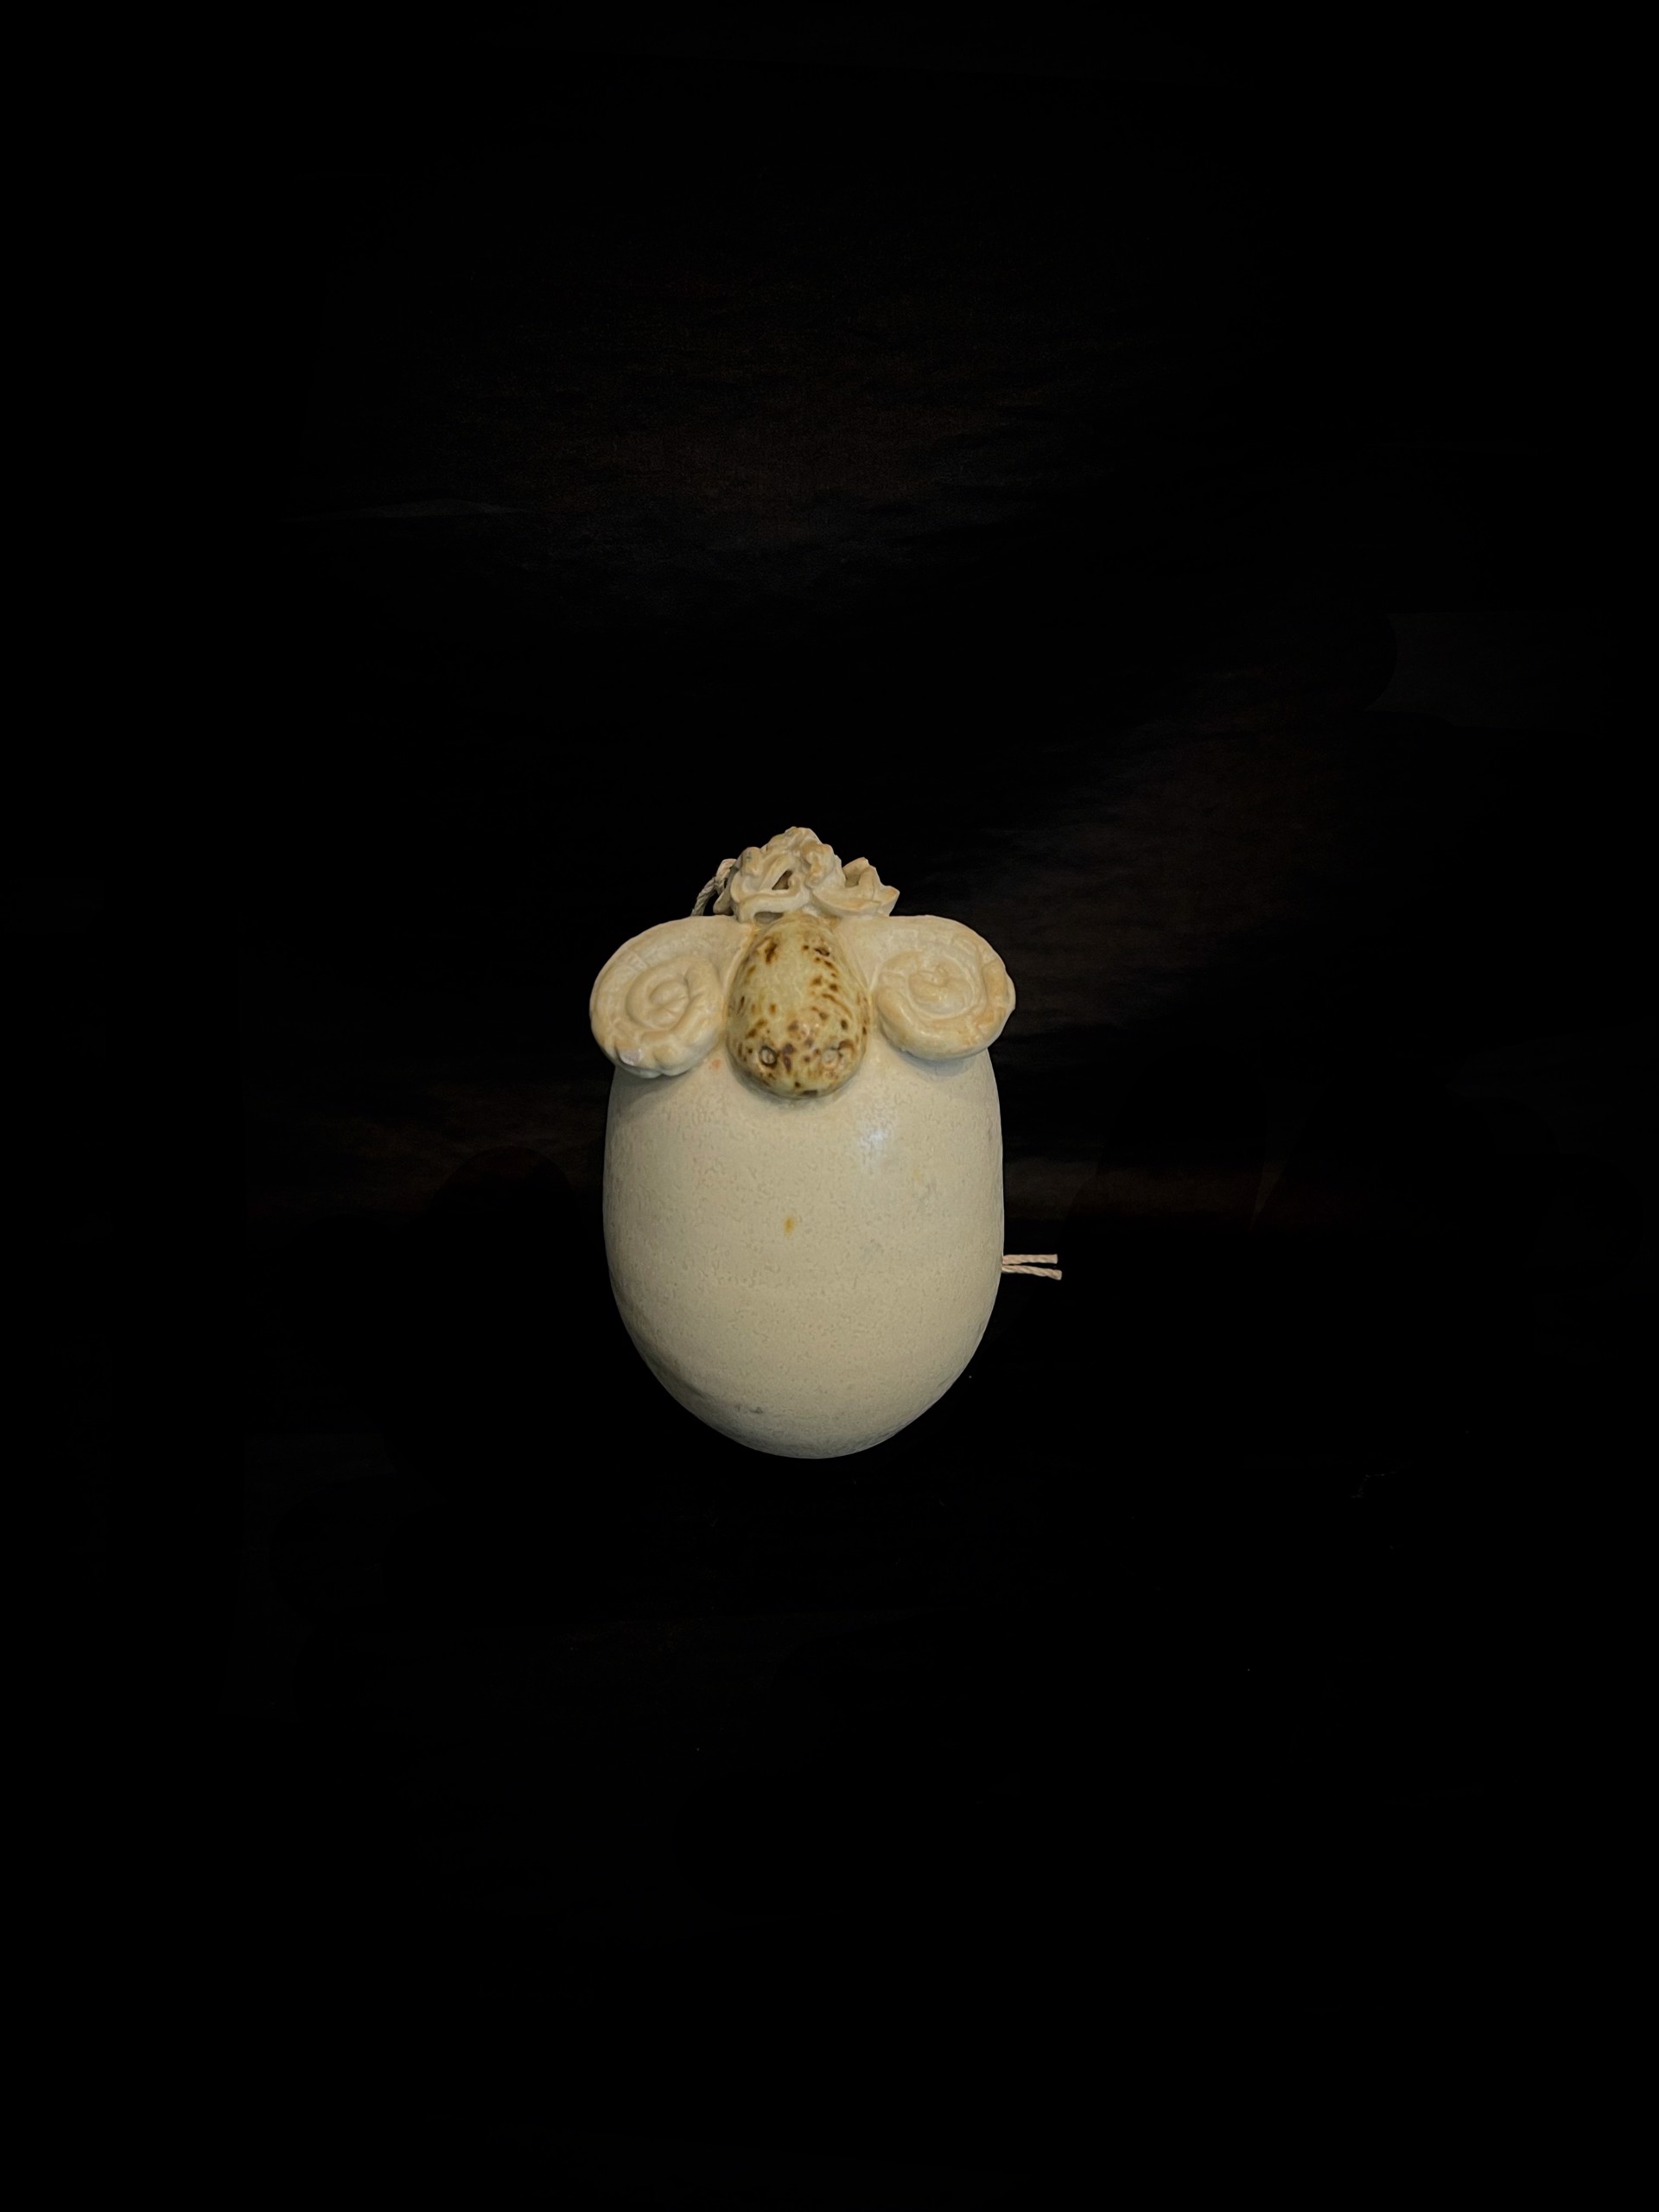 White Sheep Ornament by Karen Heathman